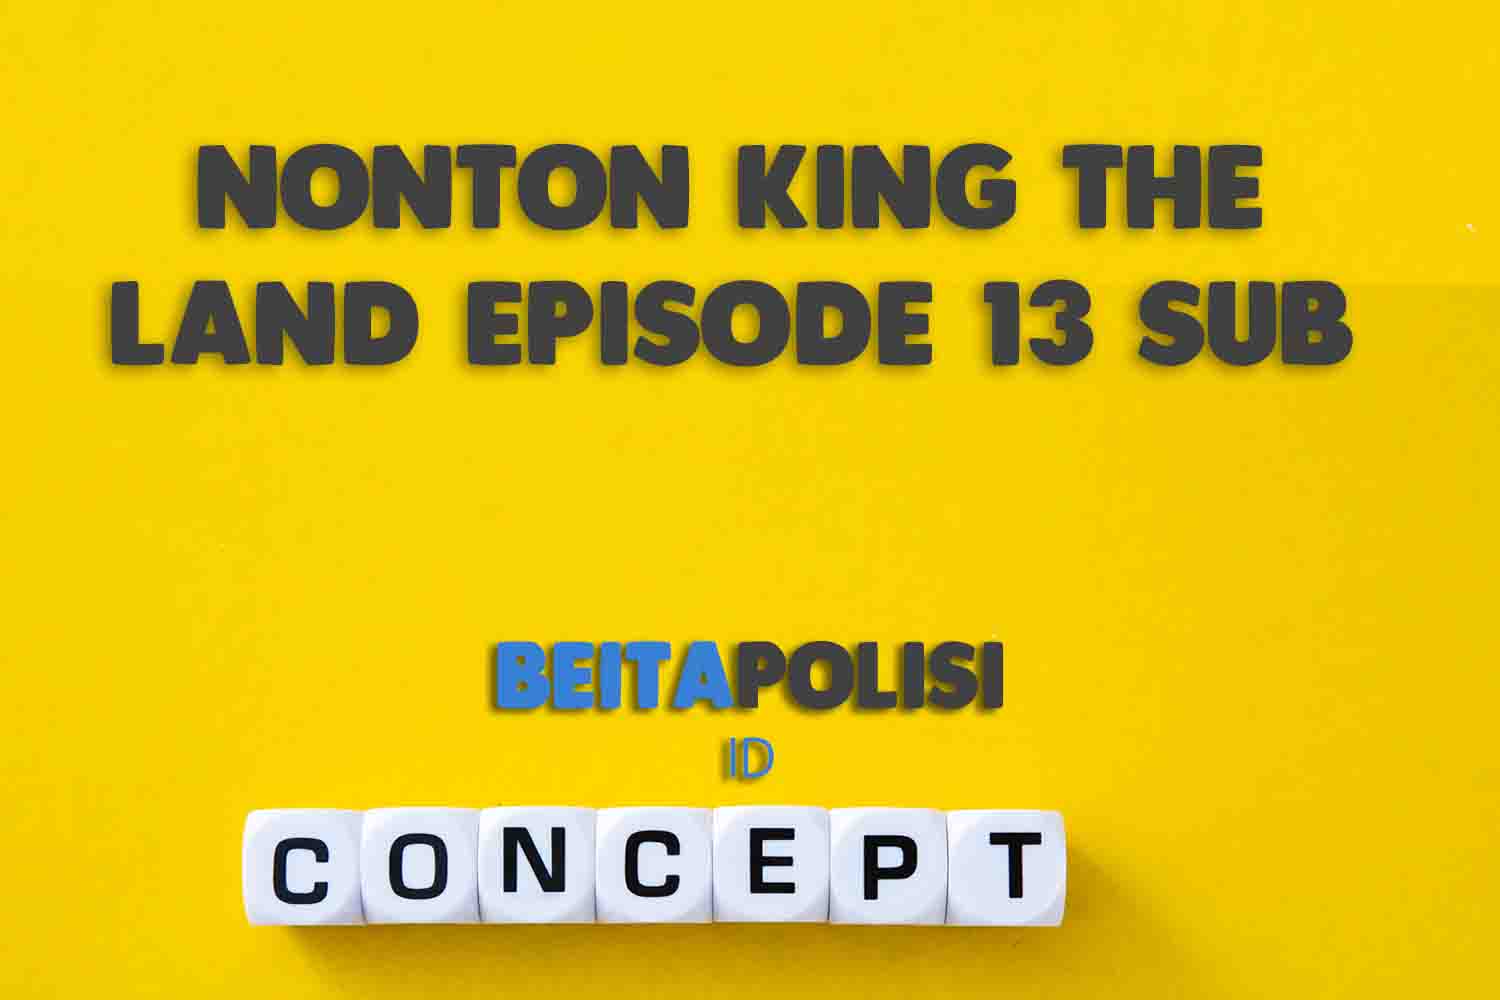 Nonton King The Land Episode 13 Sub Indo Bukan Drakorindo Klik Di Sini